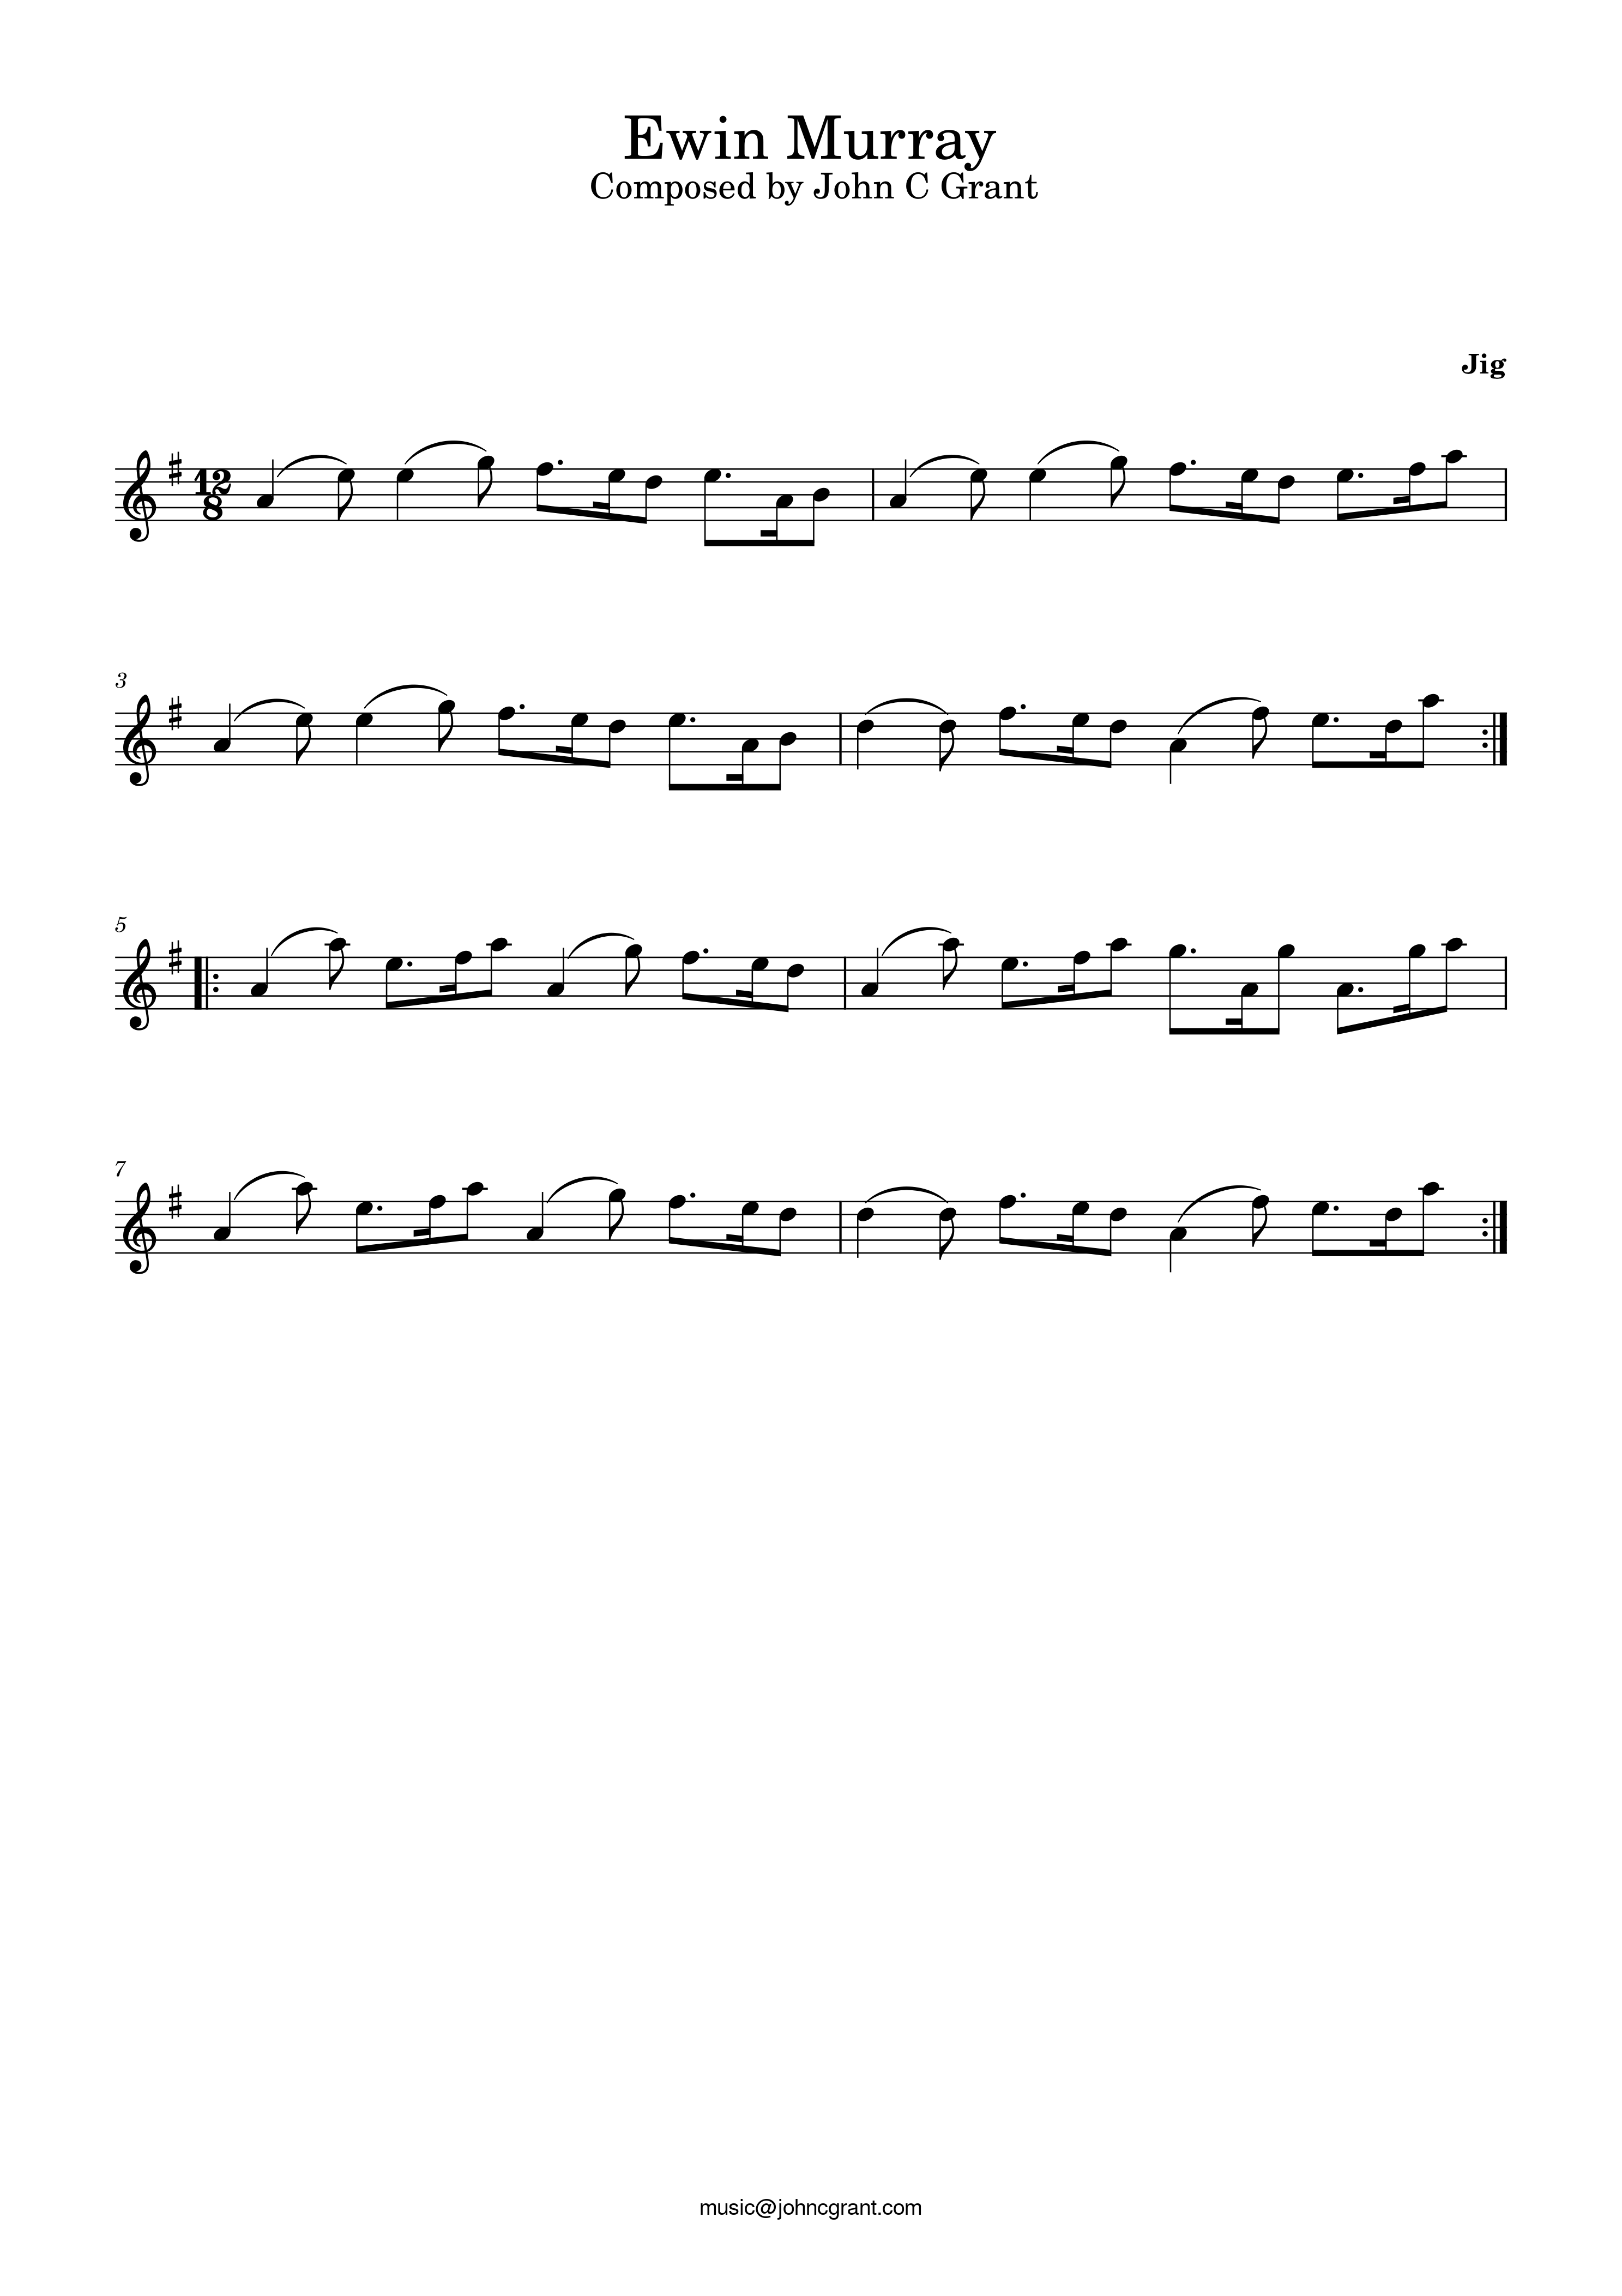 Ewin Murray - Composed by John C Grant (https://johncgrant.com). Traditional composer from Kilmarnock, Ayrshire, Scotland.